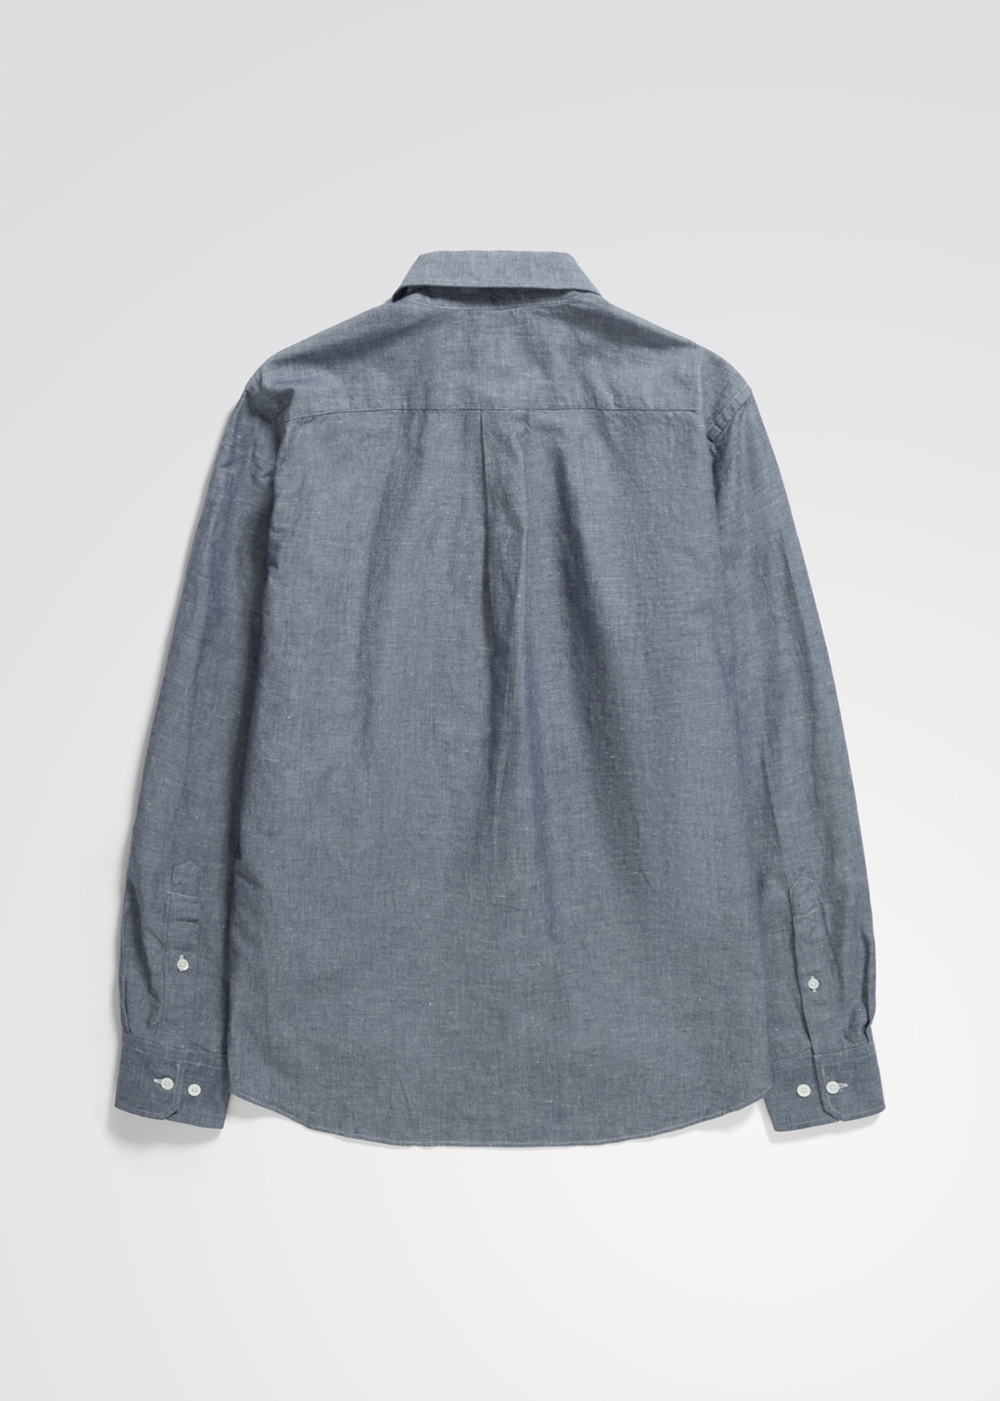 Algot Relaxed Cotton Linen Shirt - Dark Navy - Norse Projects - Danali - N40-0795